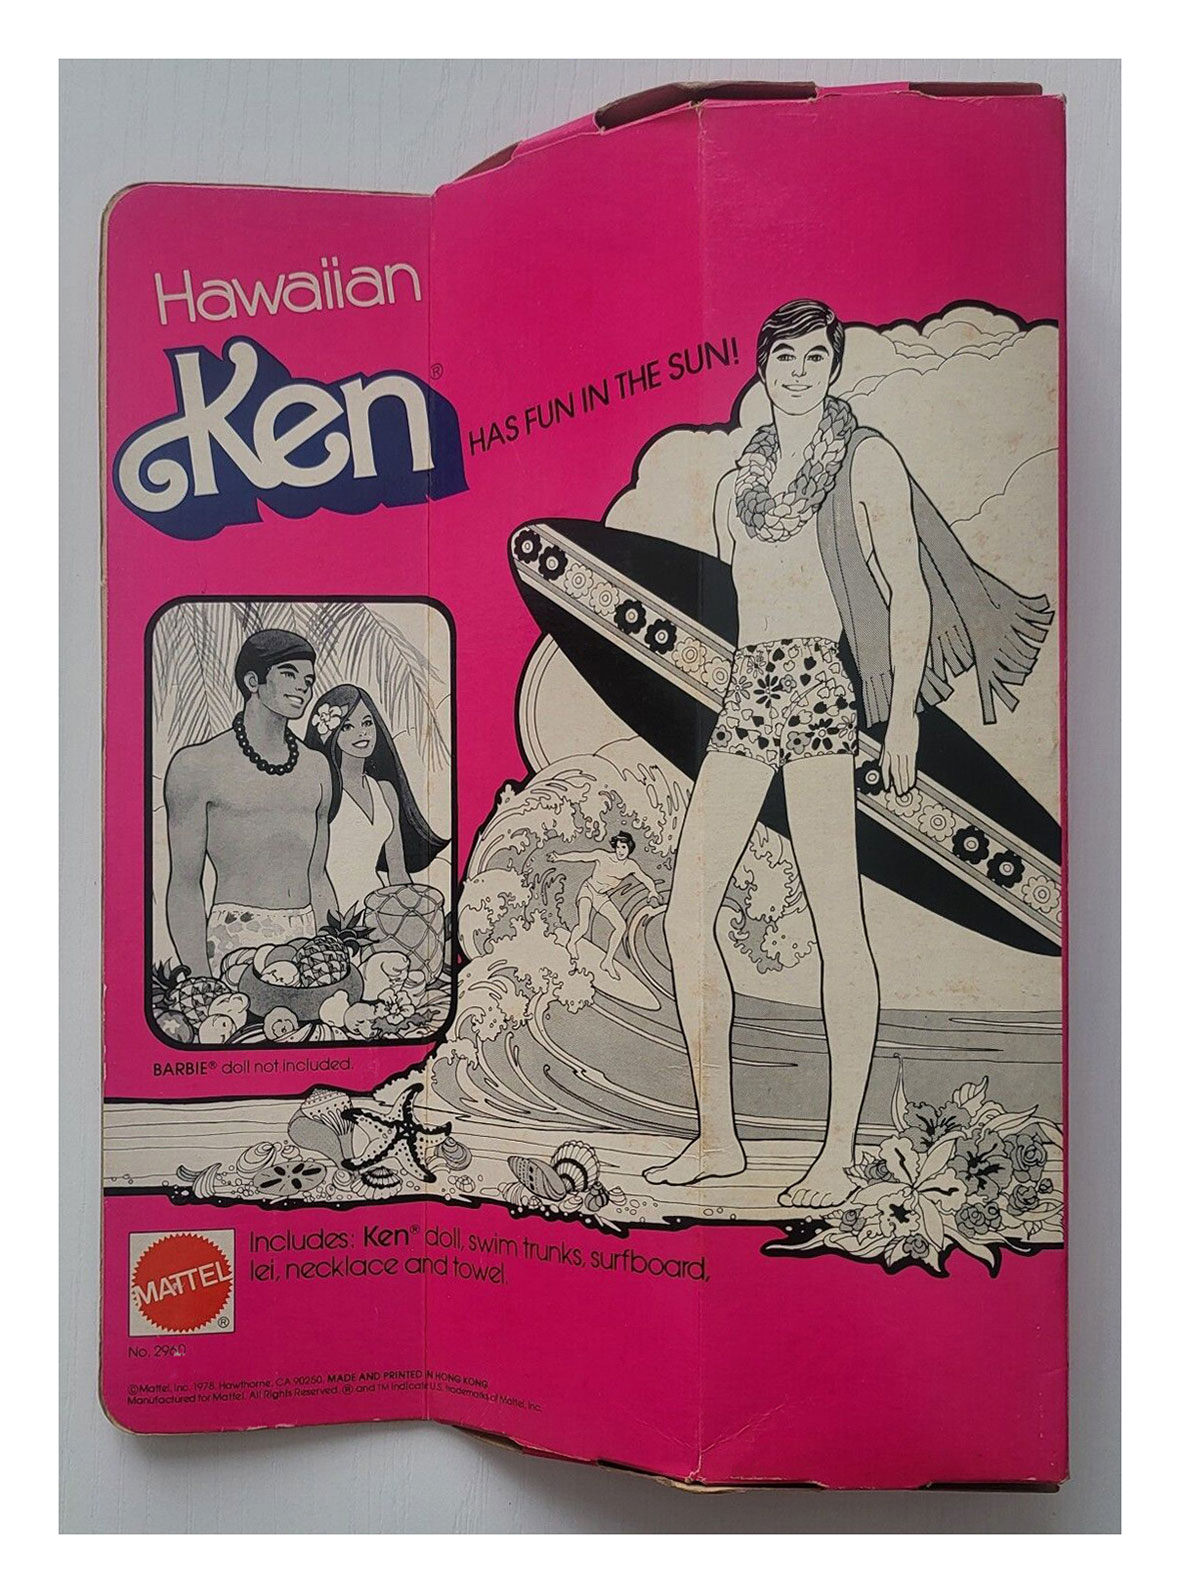 1979 #2960 Hawaiian Ken original packaging